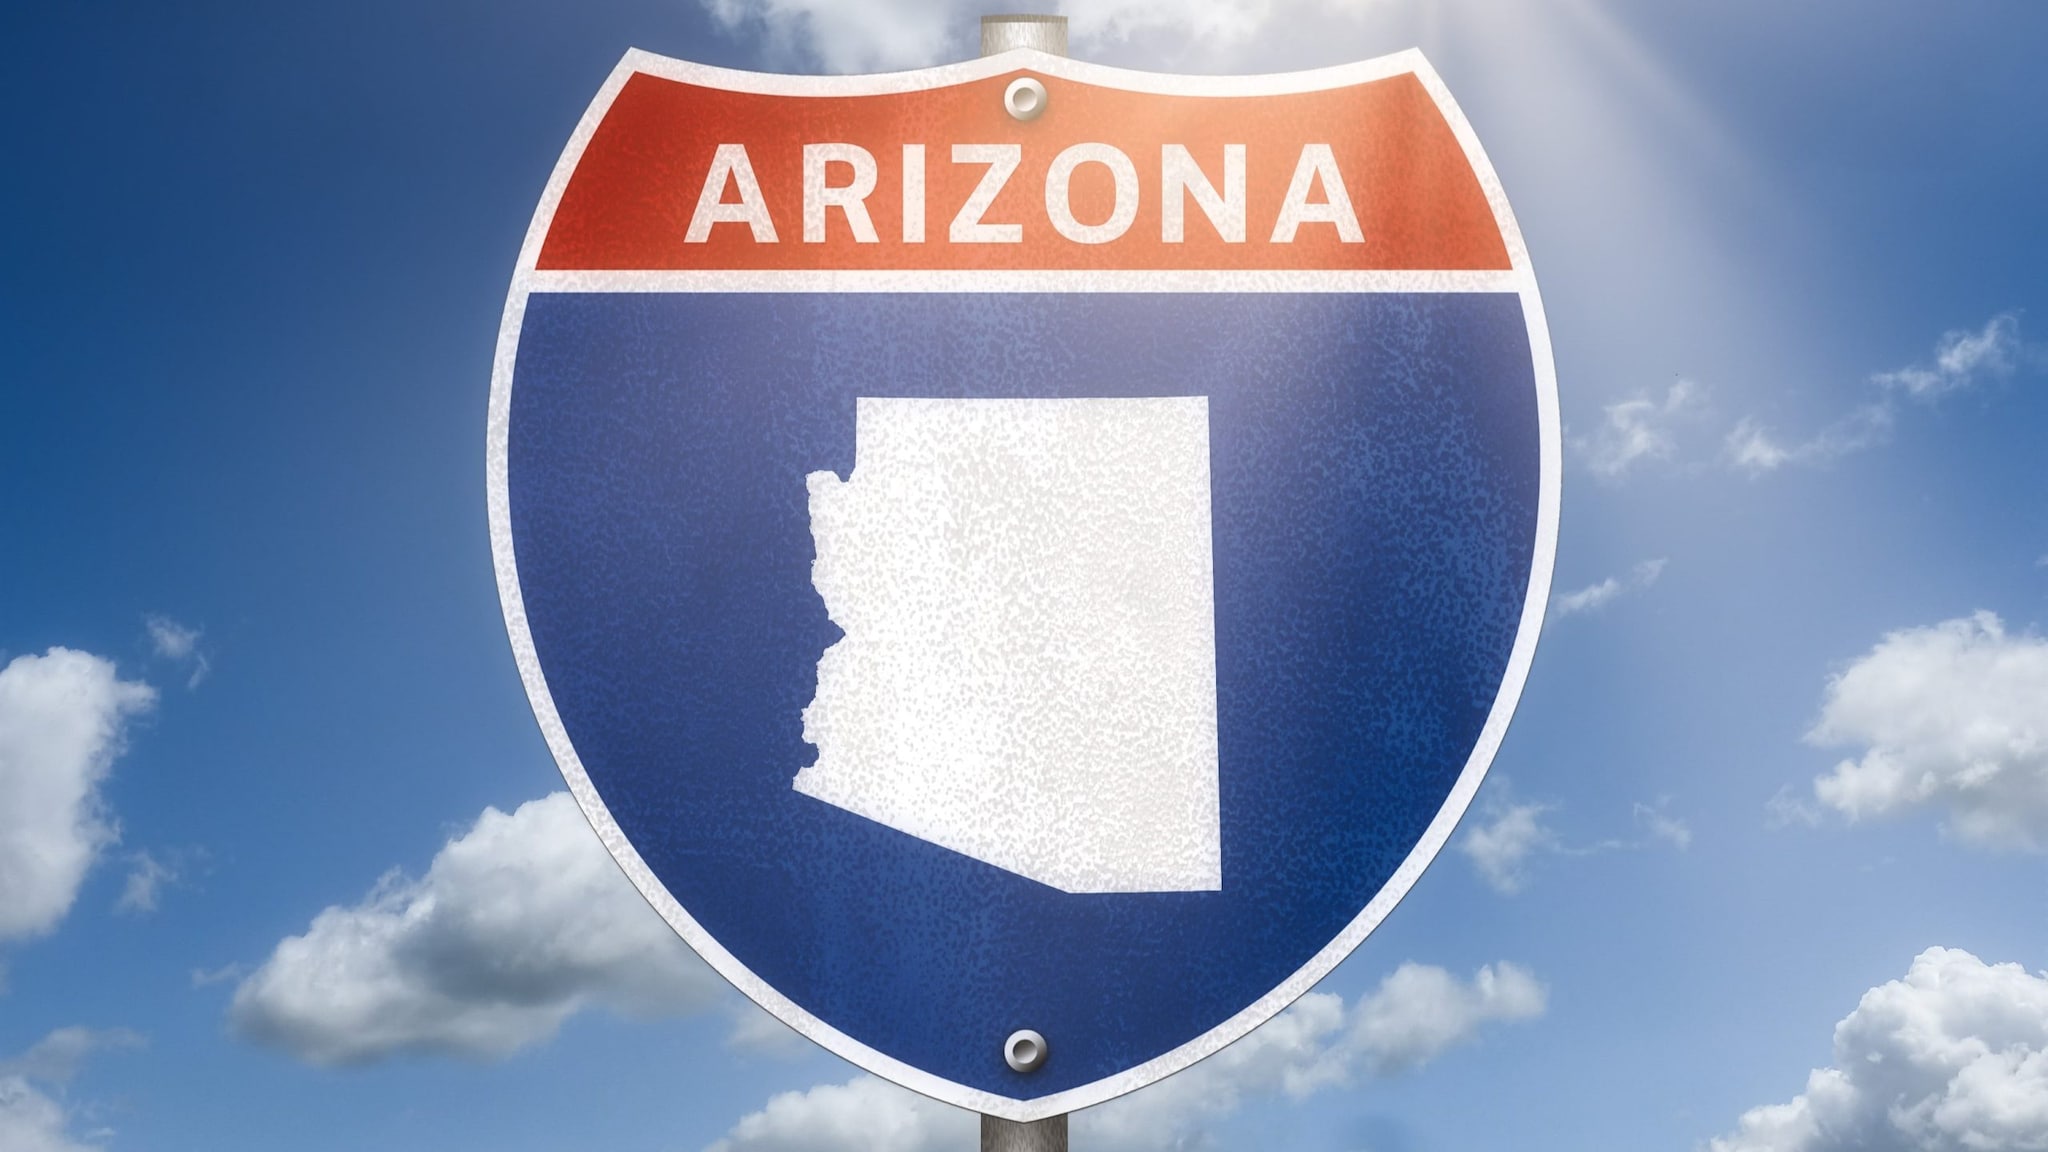 Arizona state roadside sign.